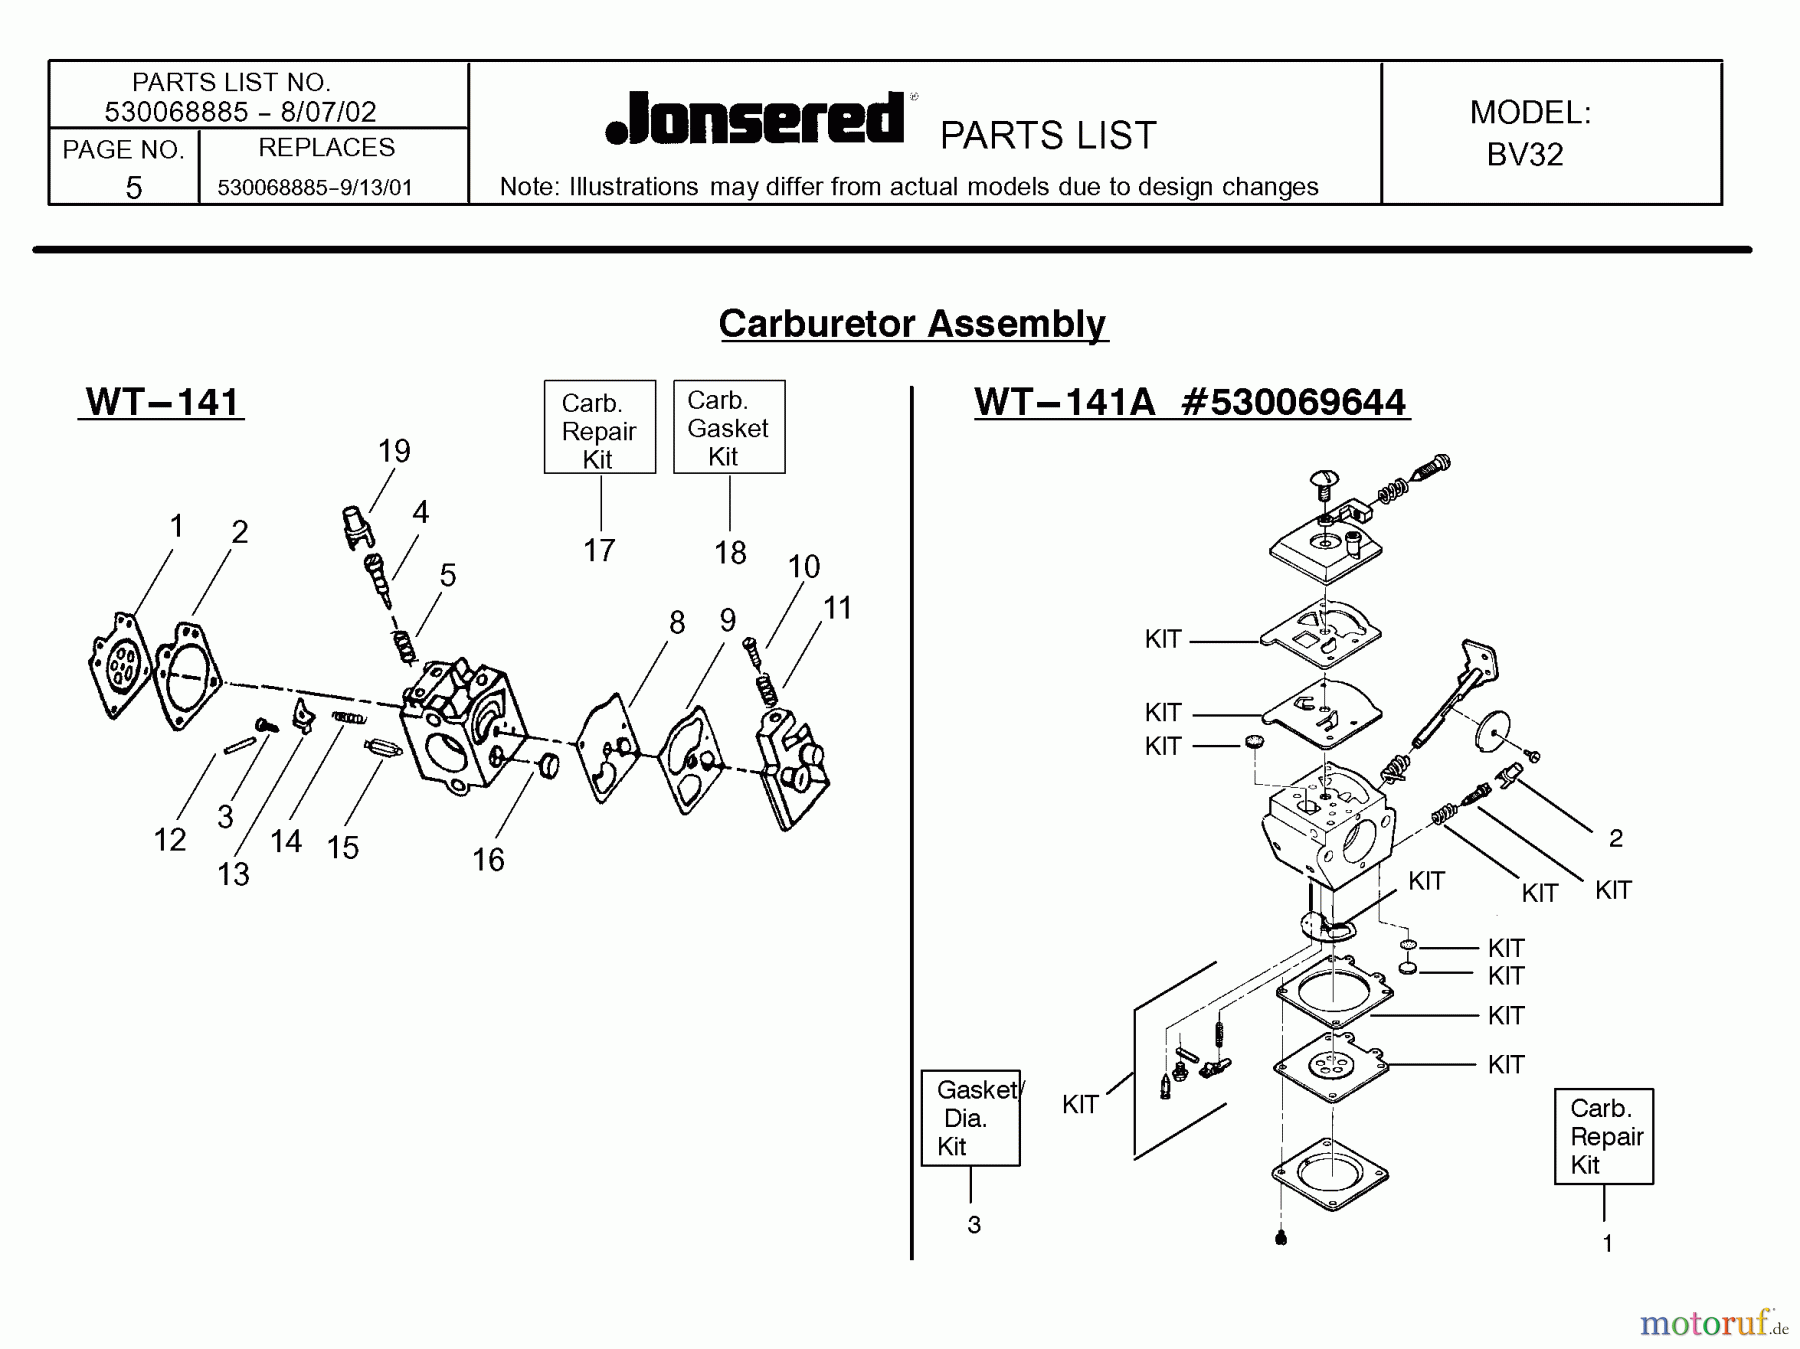  Jonsered Sonstiges BV32 - Jonsered Blower/Vacuum (2002-08) CARBURETOR DETAILS #1